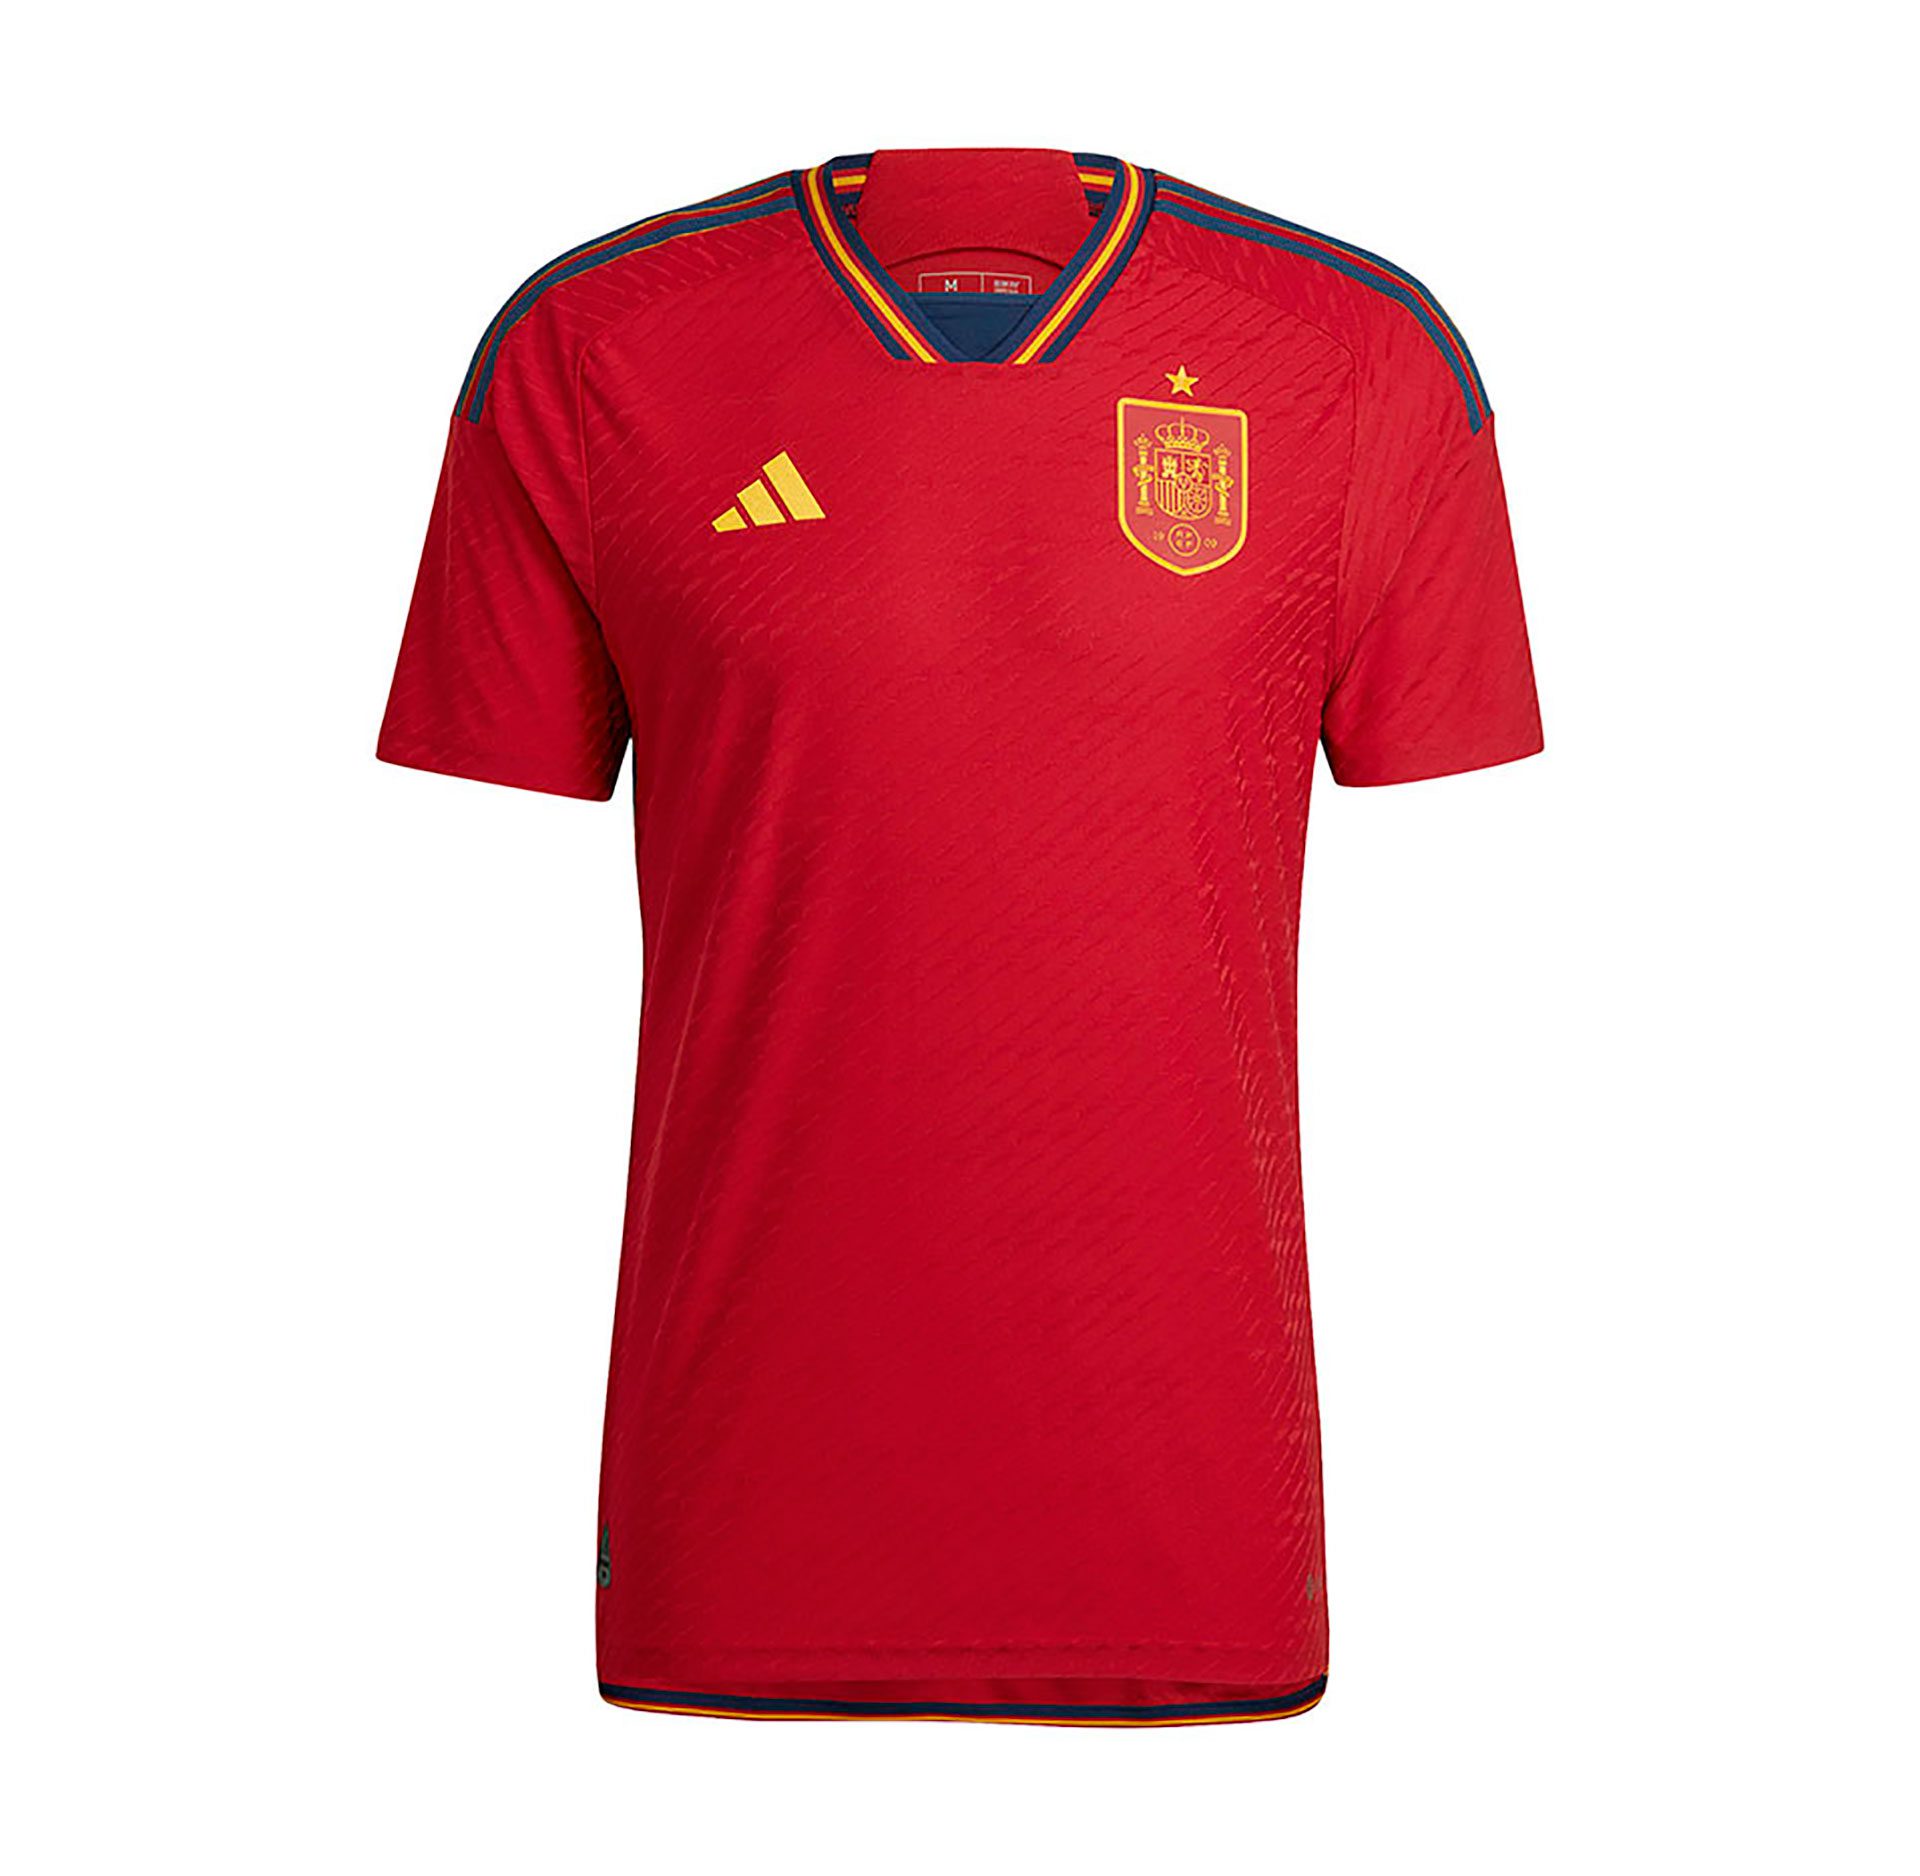 Spain national team shirt